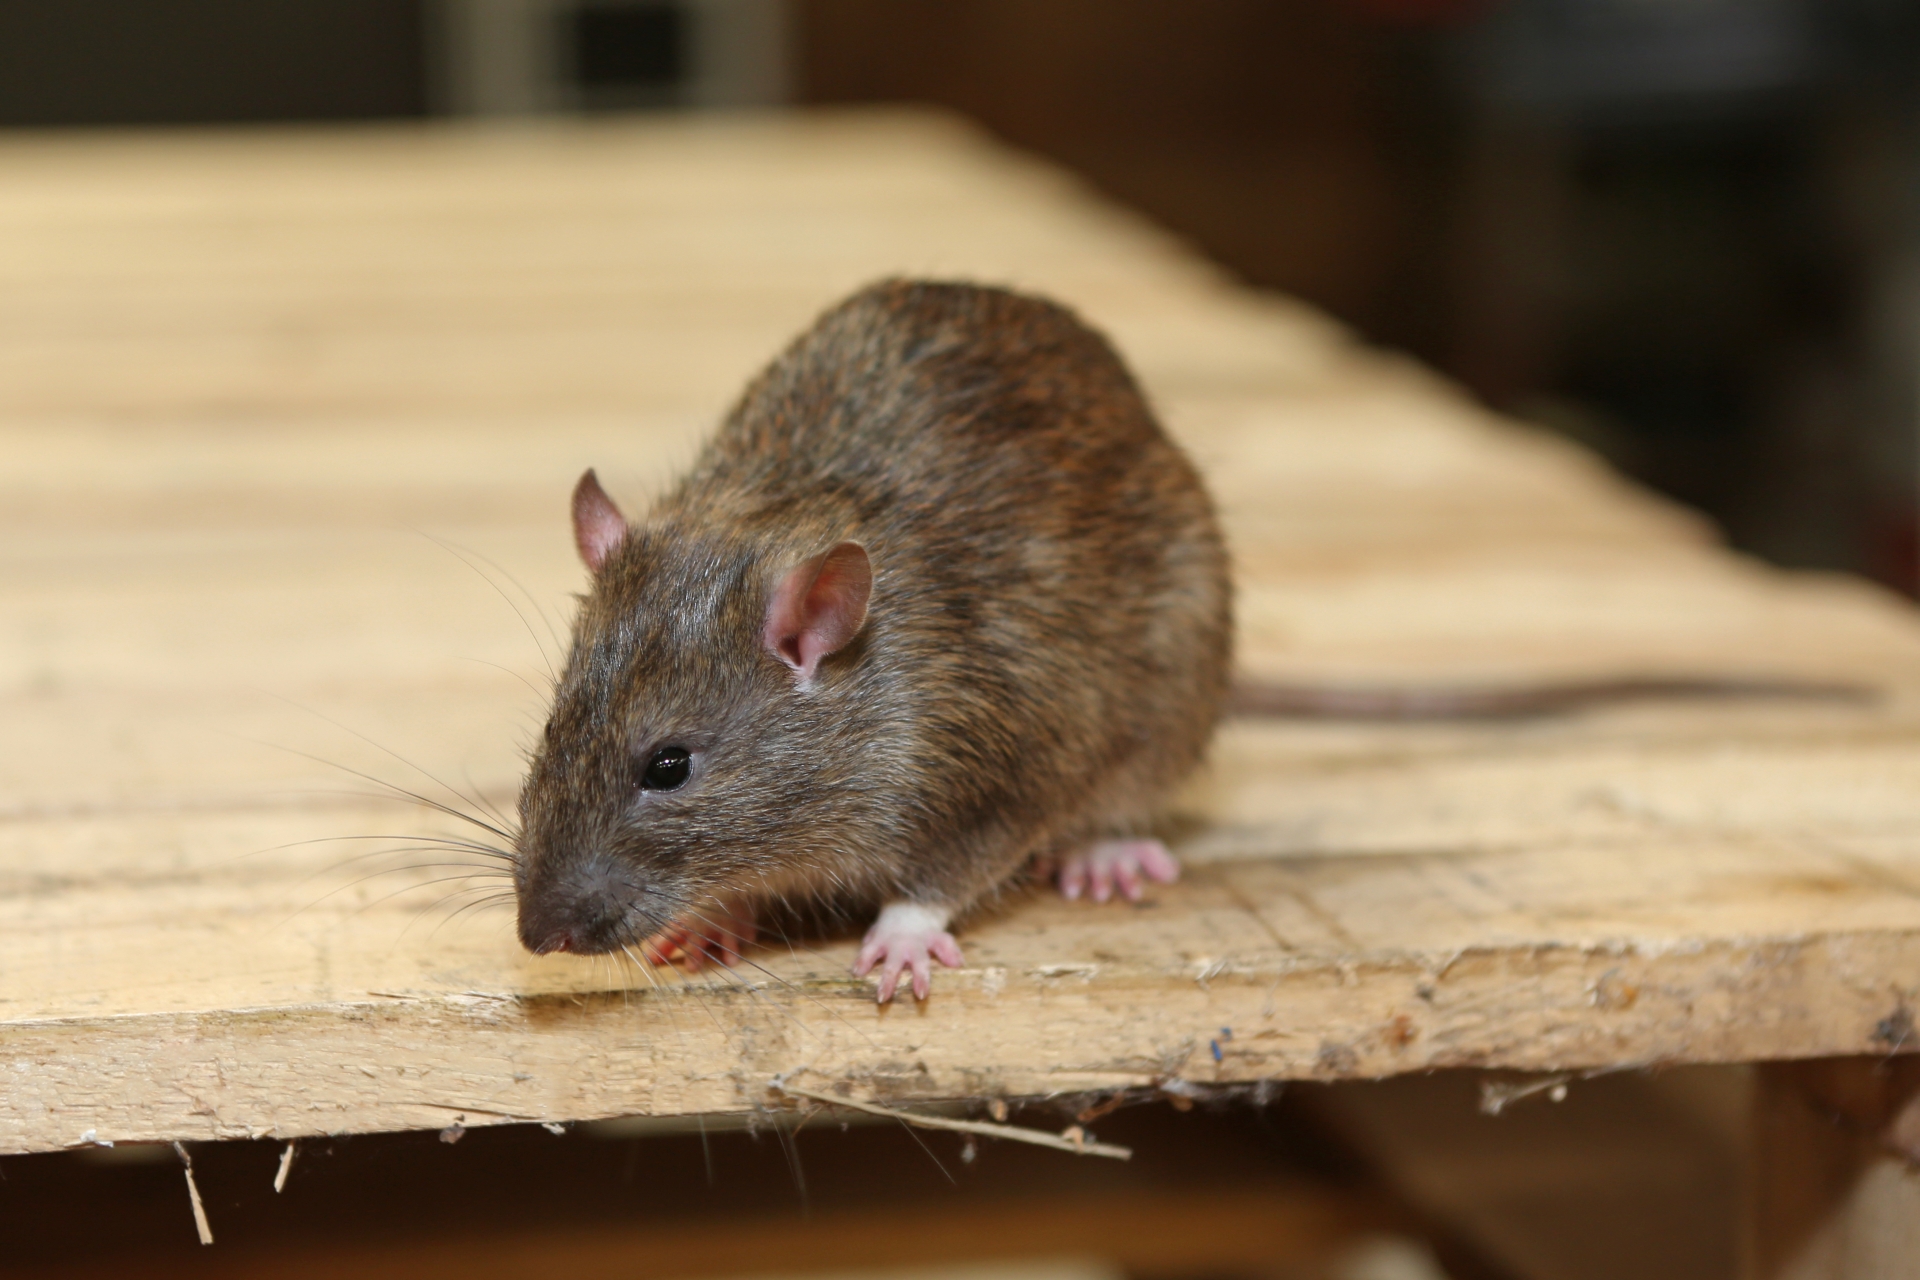 Rat Infestation, Pest Control in Twickenham, St. Margarets, TW1, TW2. Call Now 020 8166 9746